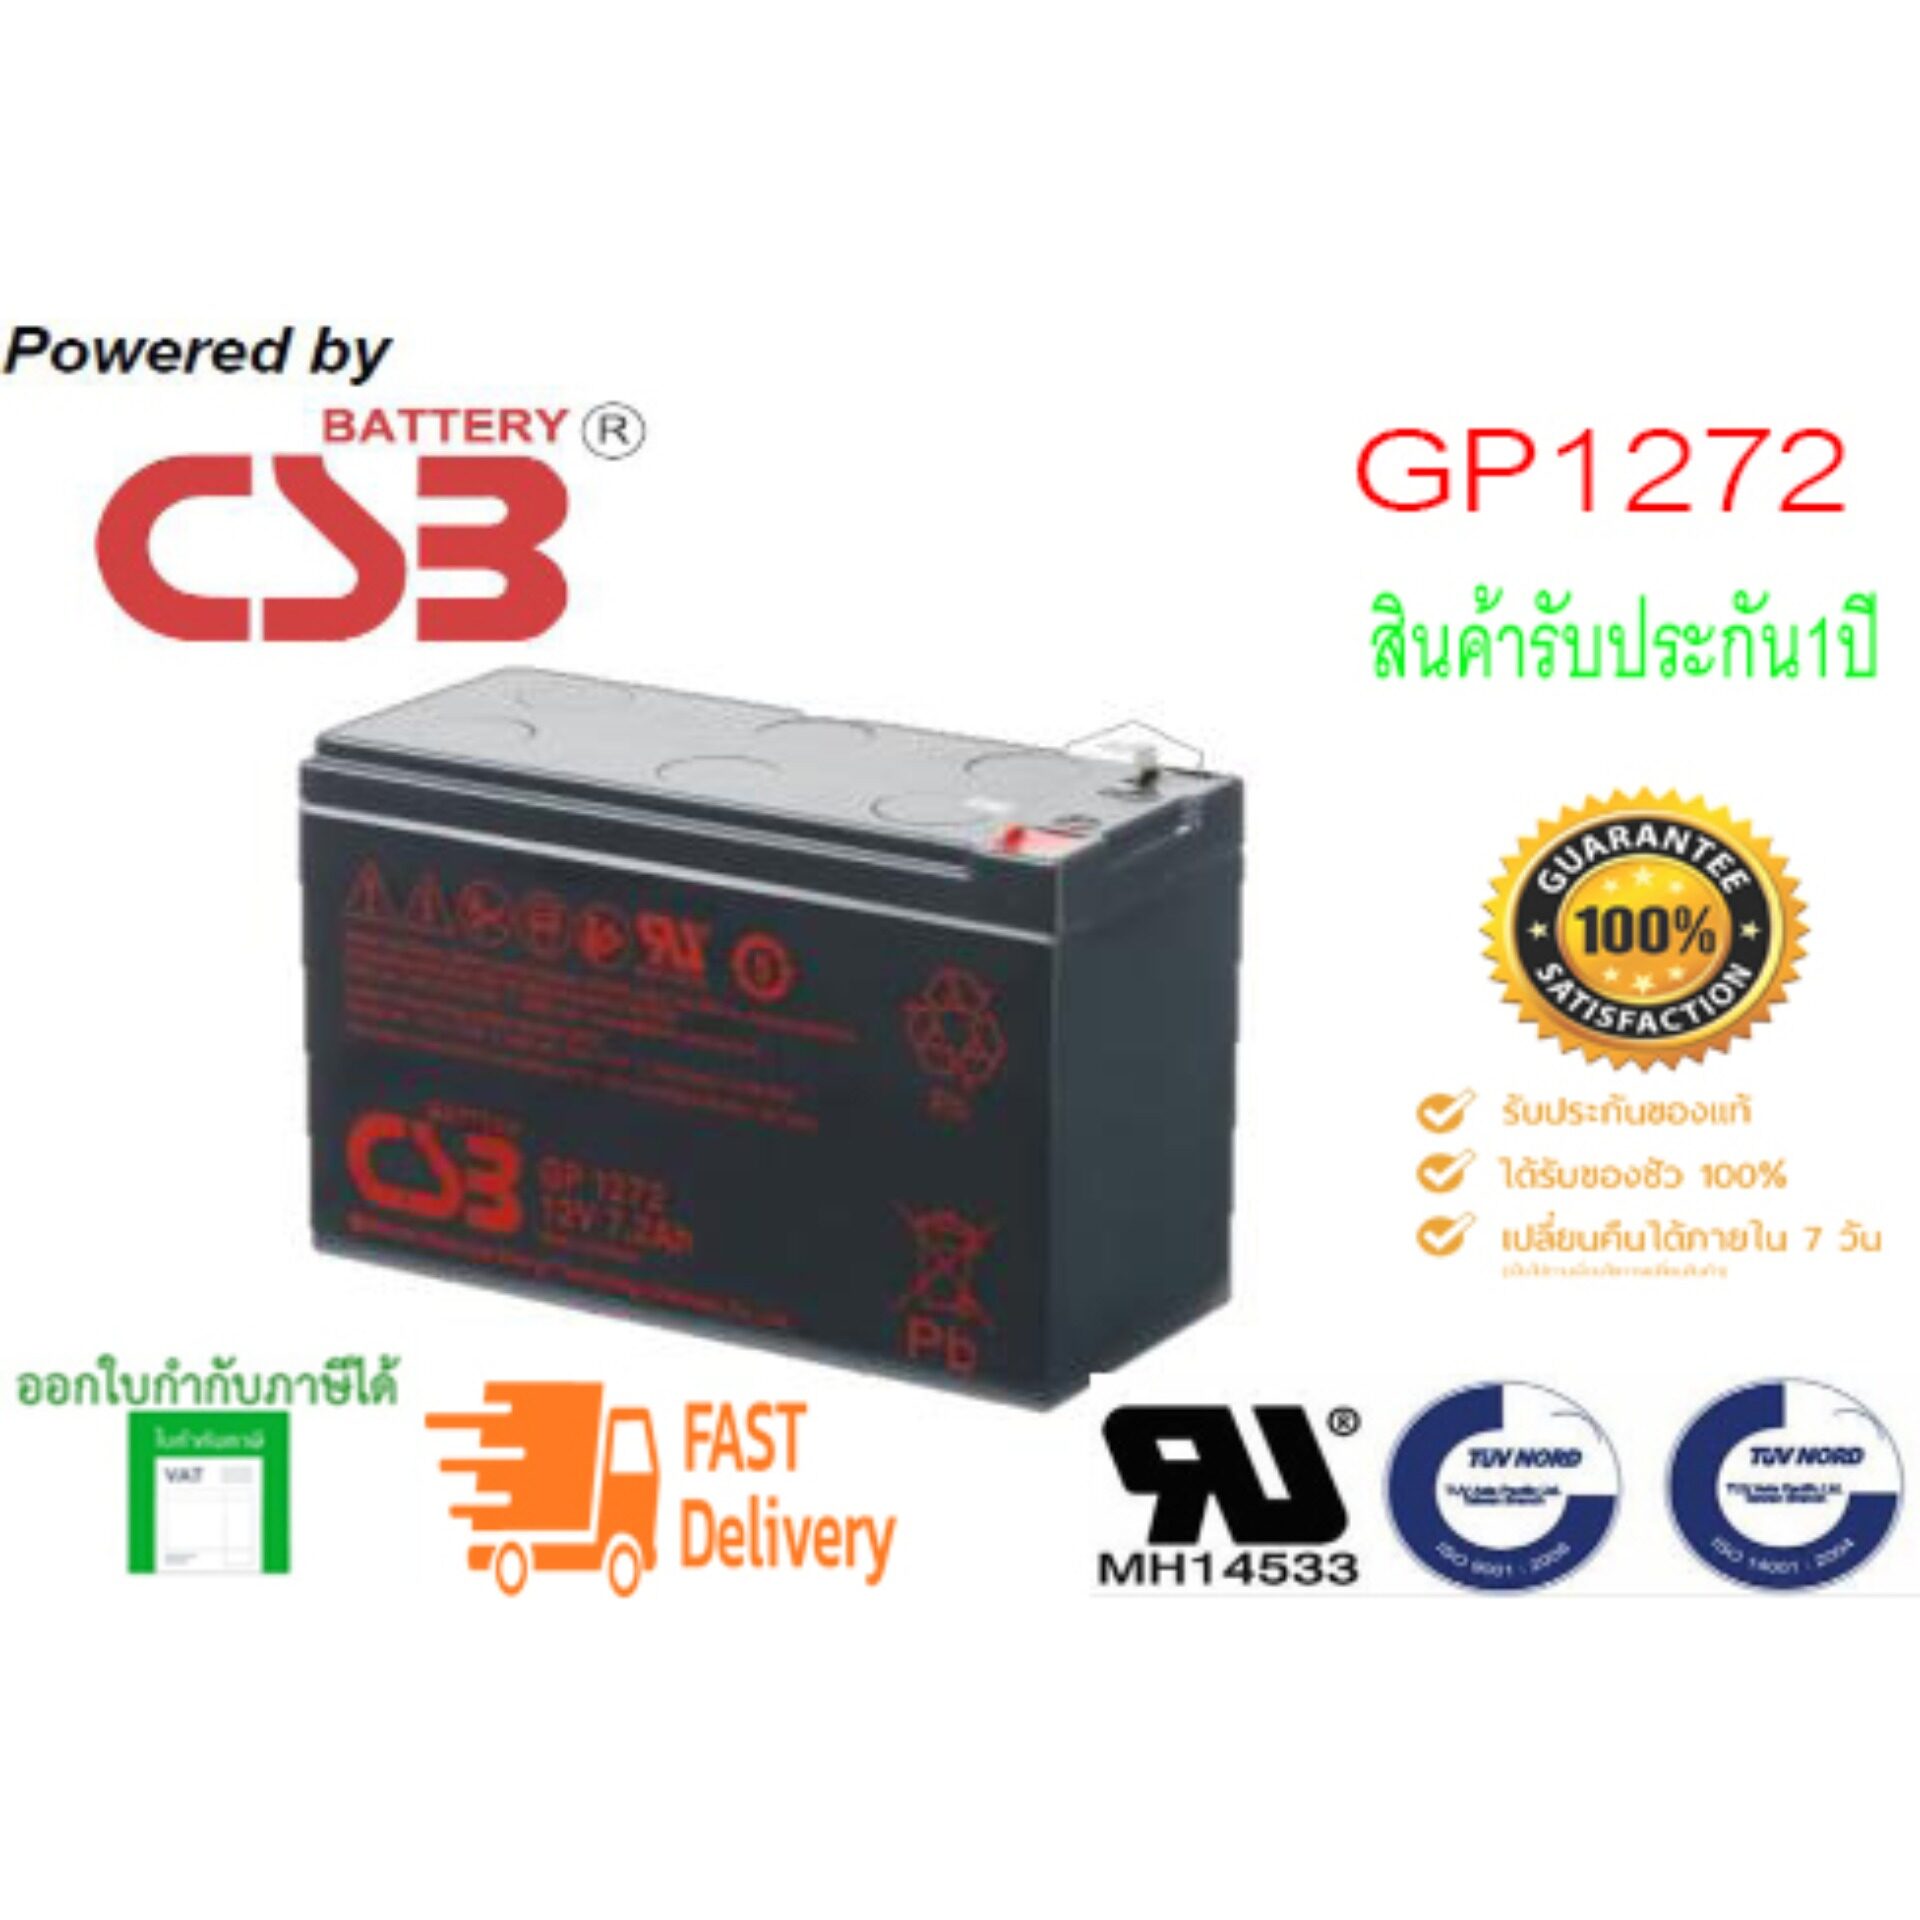 CSB Battery รุ่น GP1272F2  (12V 7.2AH)(By Hitachi Chemical) ใช้สำรองไฟฟ้าหรือ UPS ทุกรุ่น ขอใหม่แท้100%